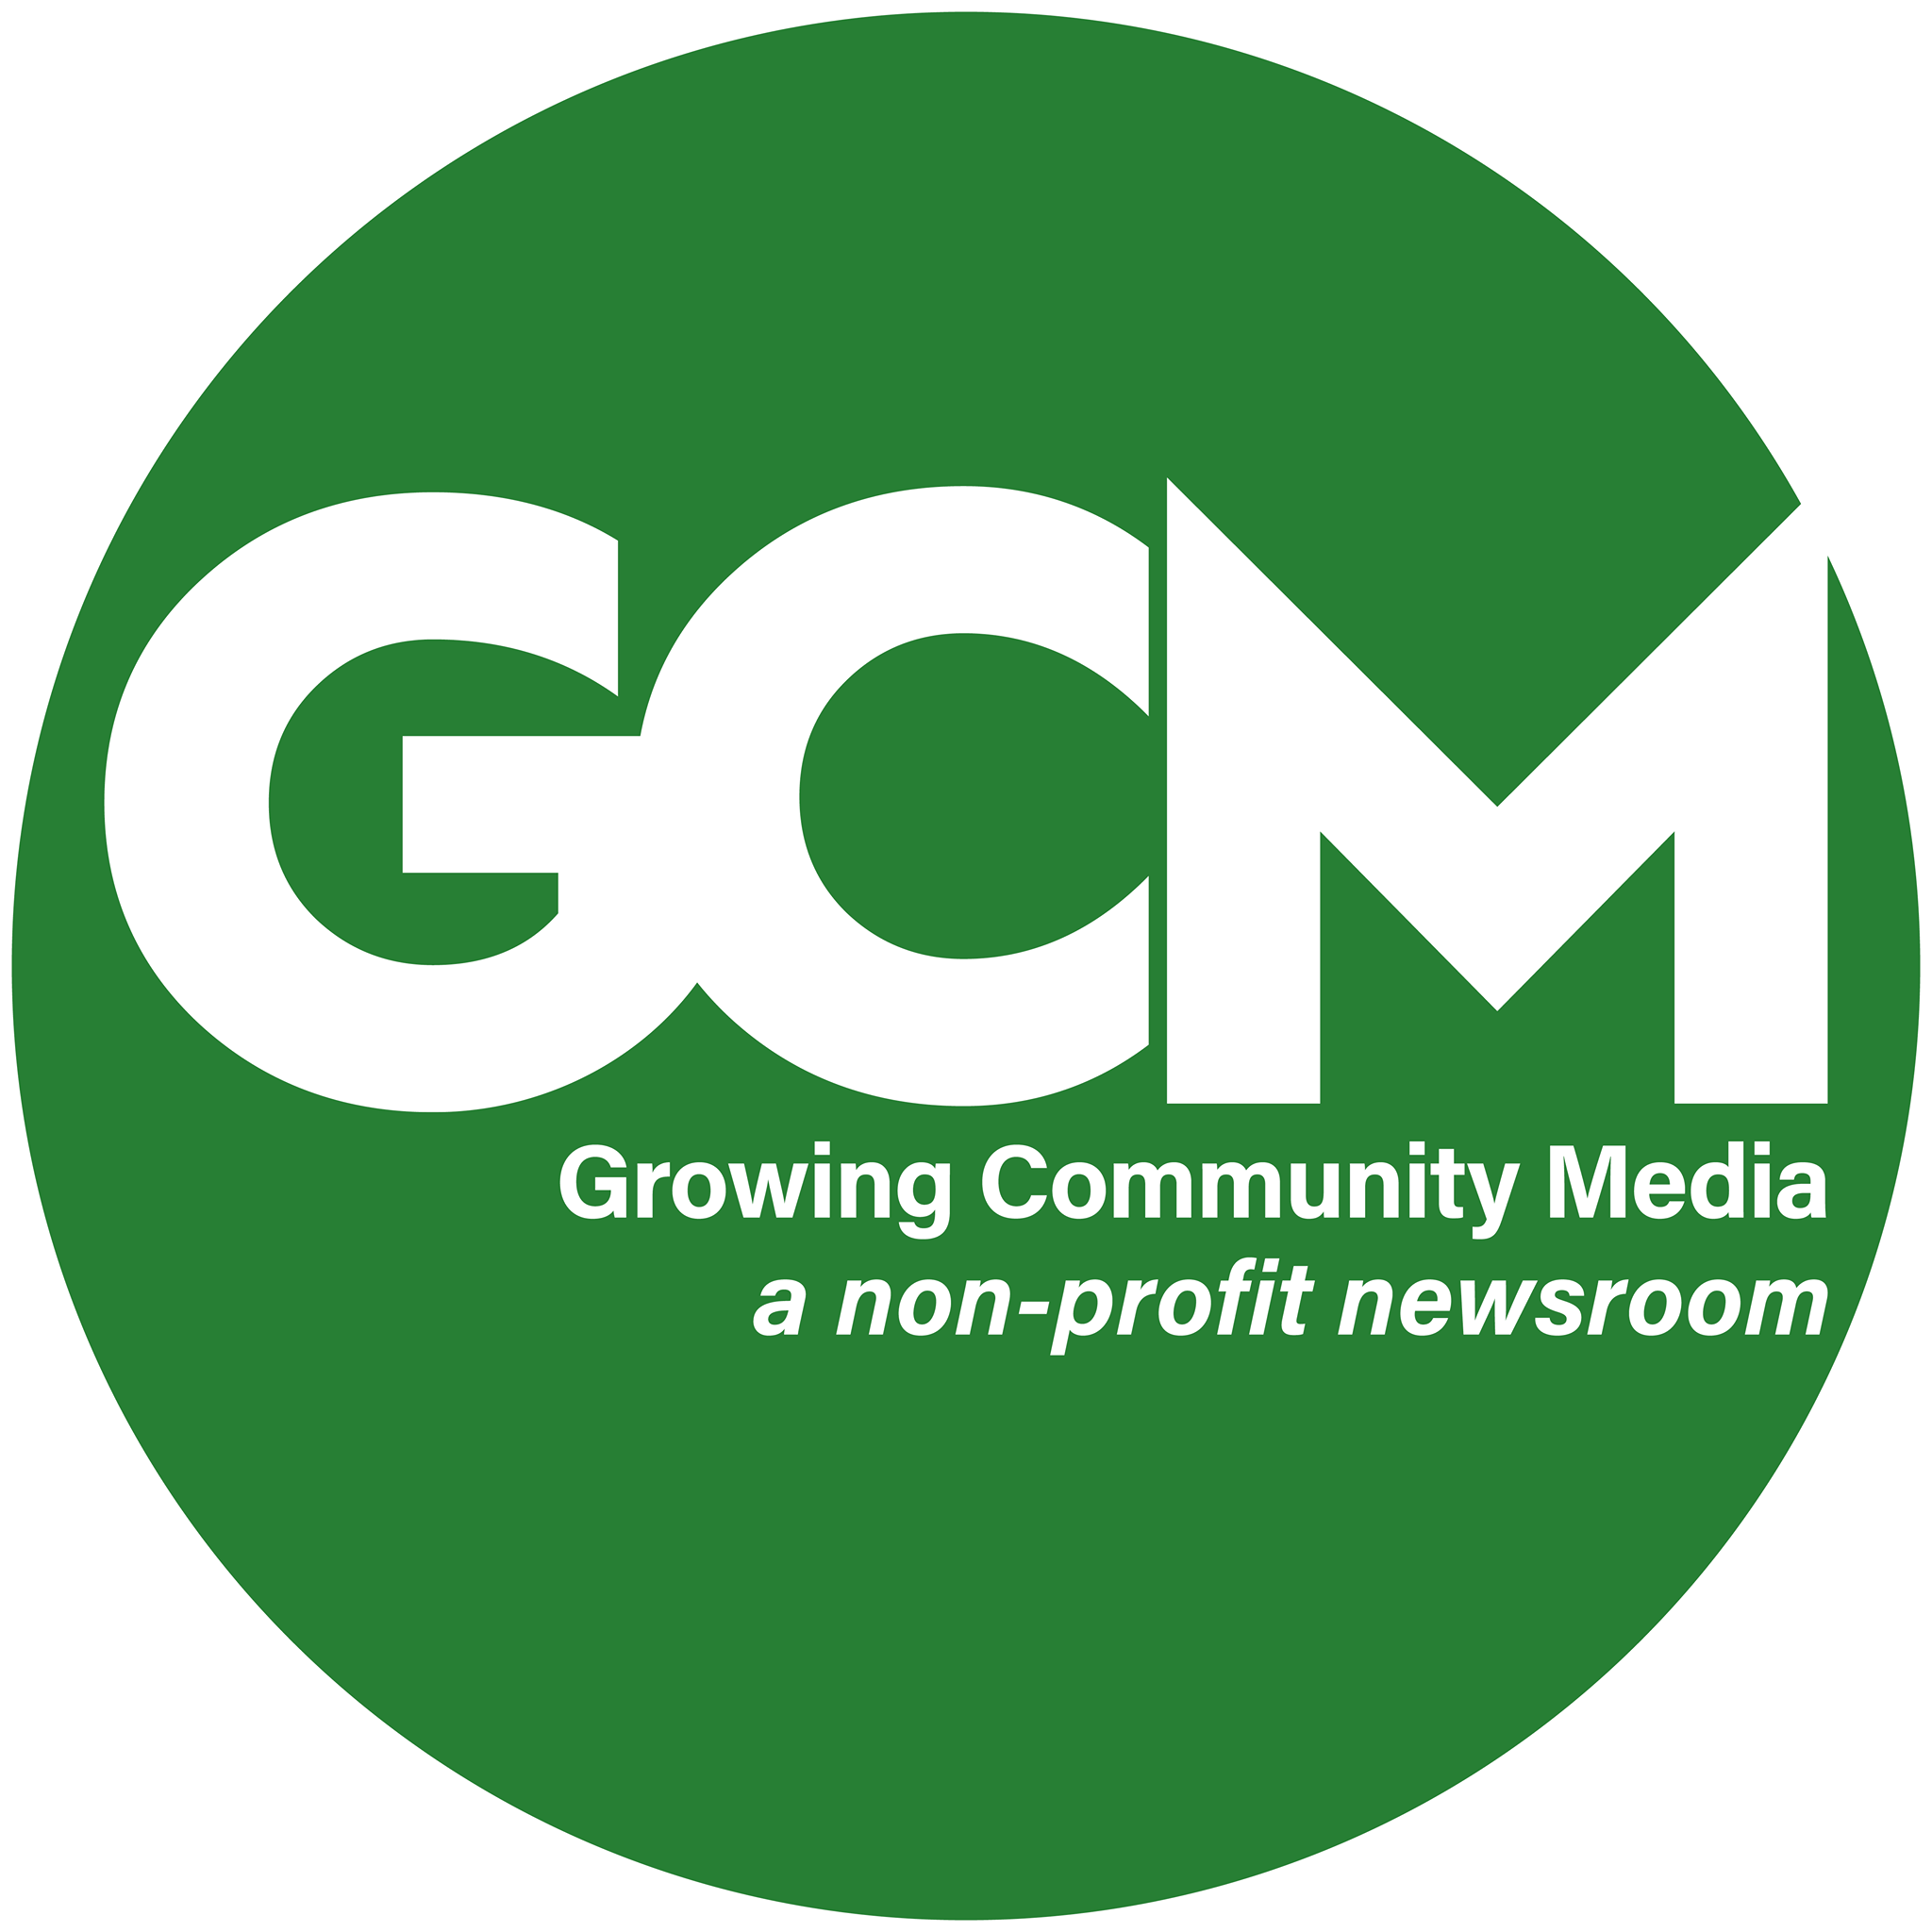 Growing Community Media